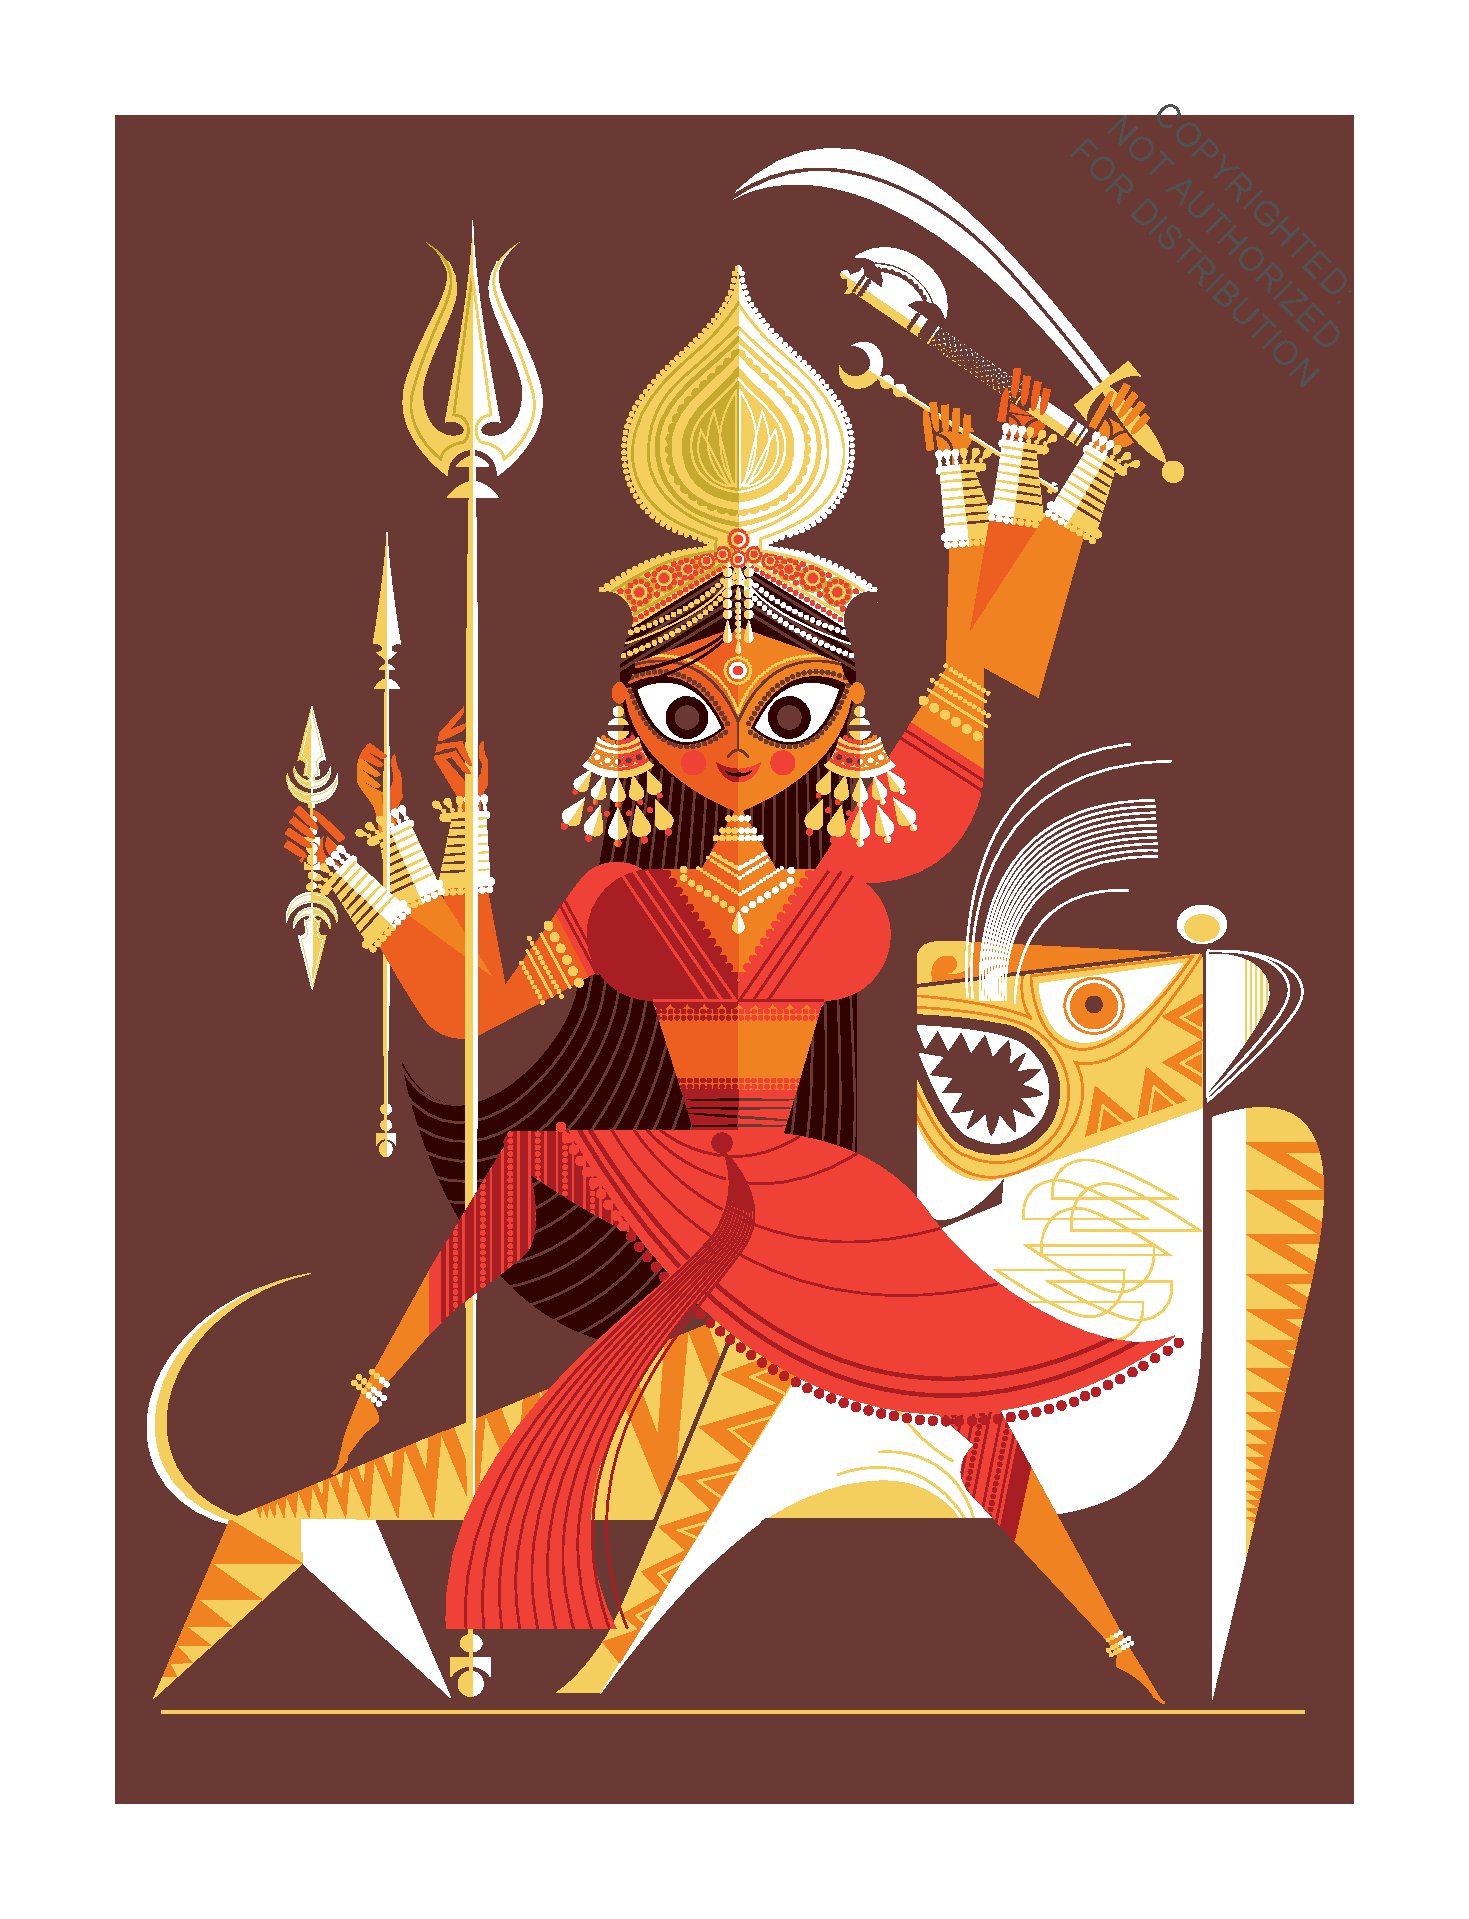 Hindu Deities Poster